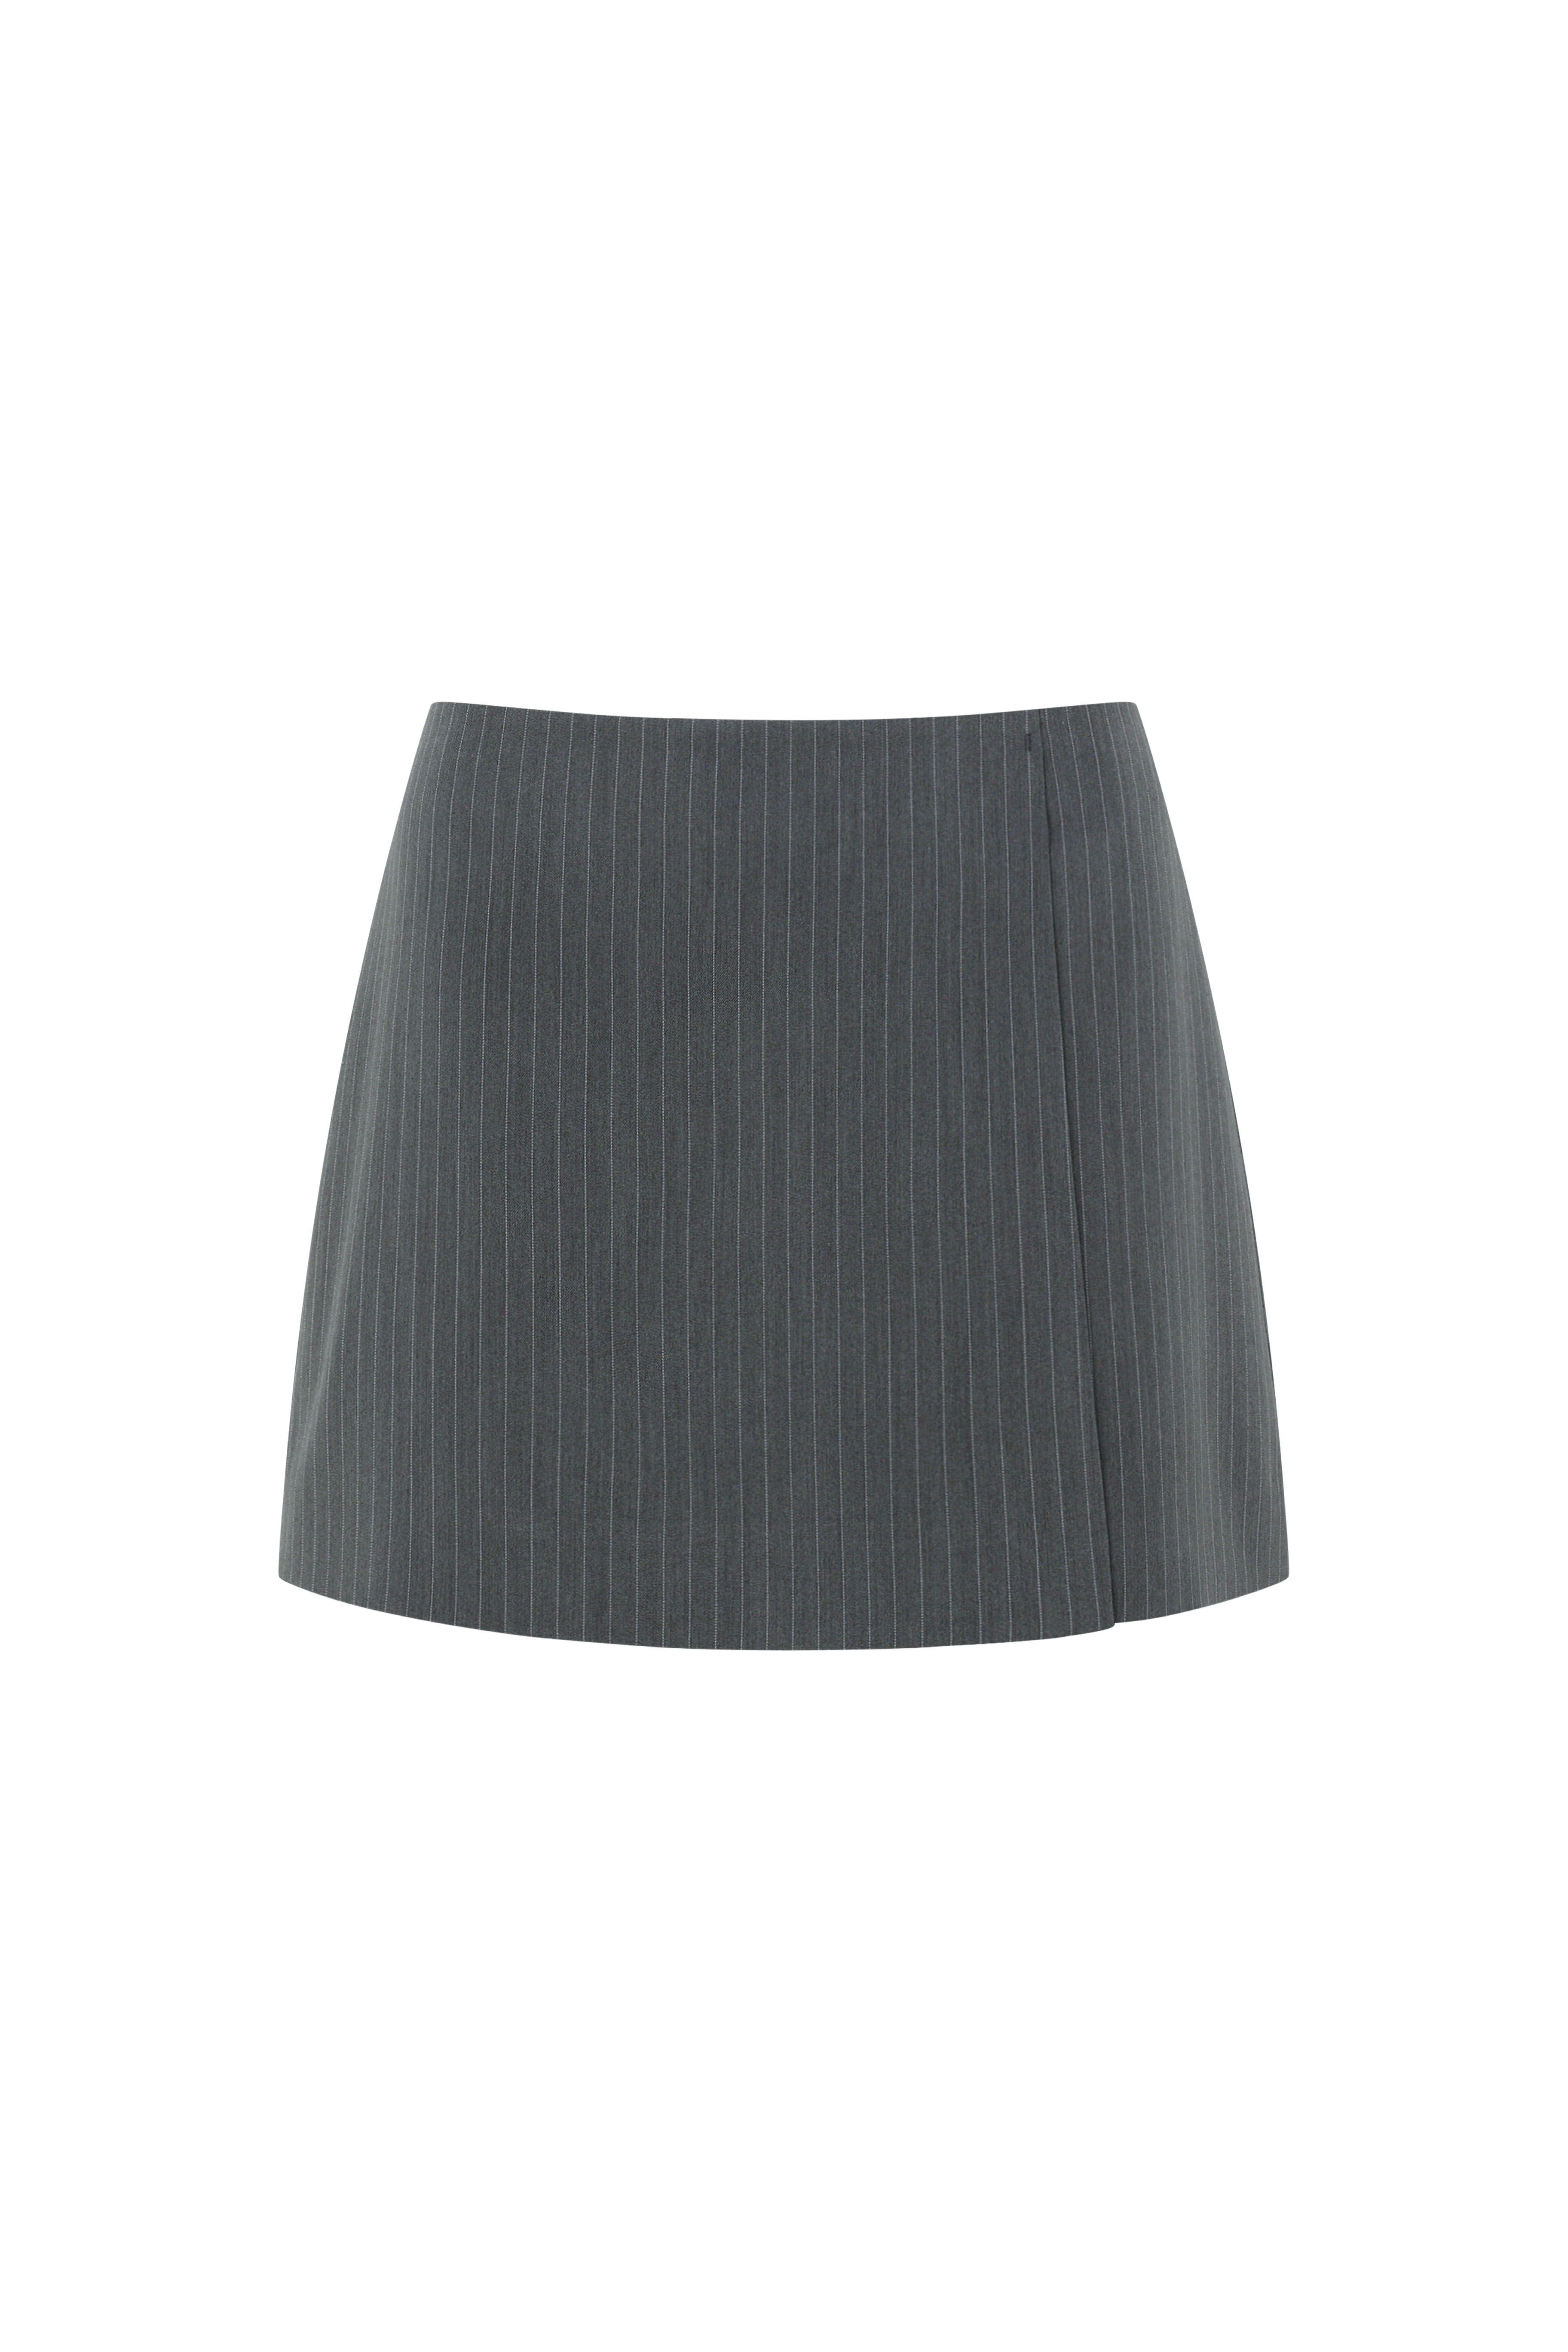 90s Classy Wrap Mini Skirt (GREY) - 포니테일